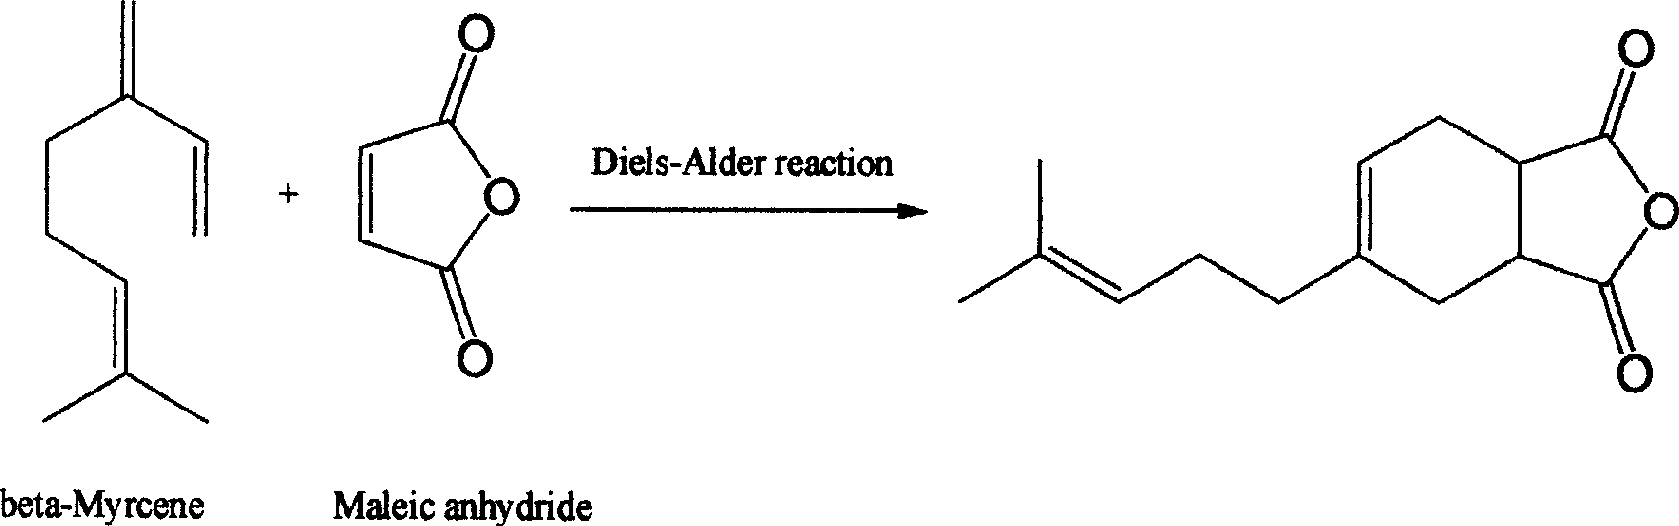 Novel purpose of 4-(4-methyl-3-pentenyl)-4-cyclohexene-1, 2-diacid anhydride